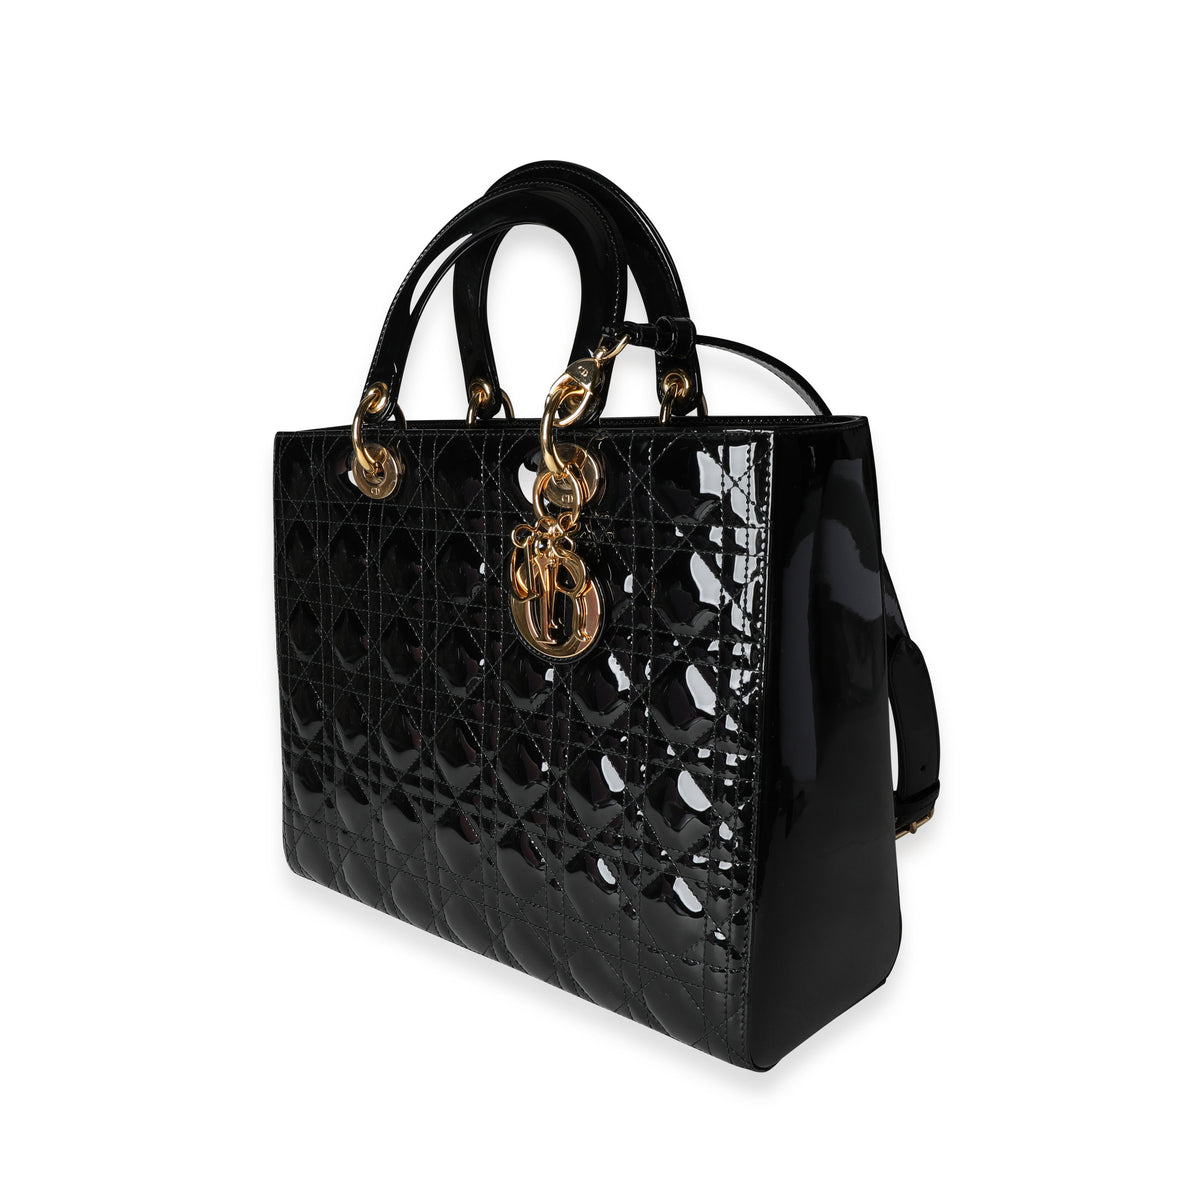 Dior Black Cannage Patent Calfskin Large Lady Dior Bag